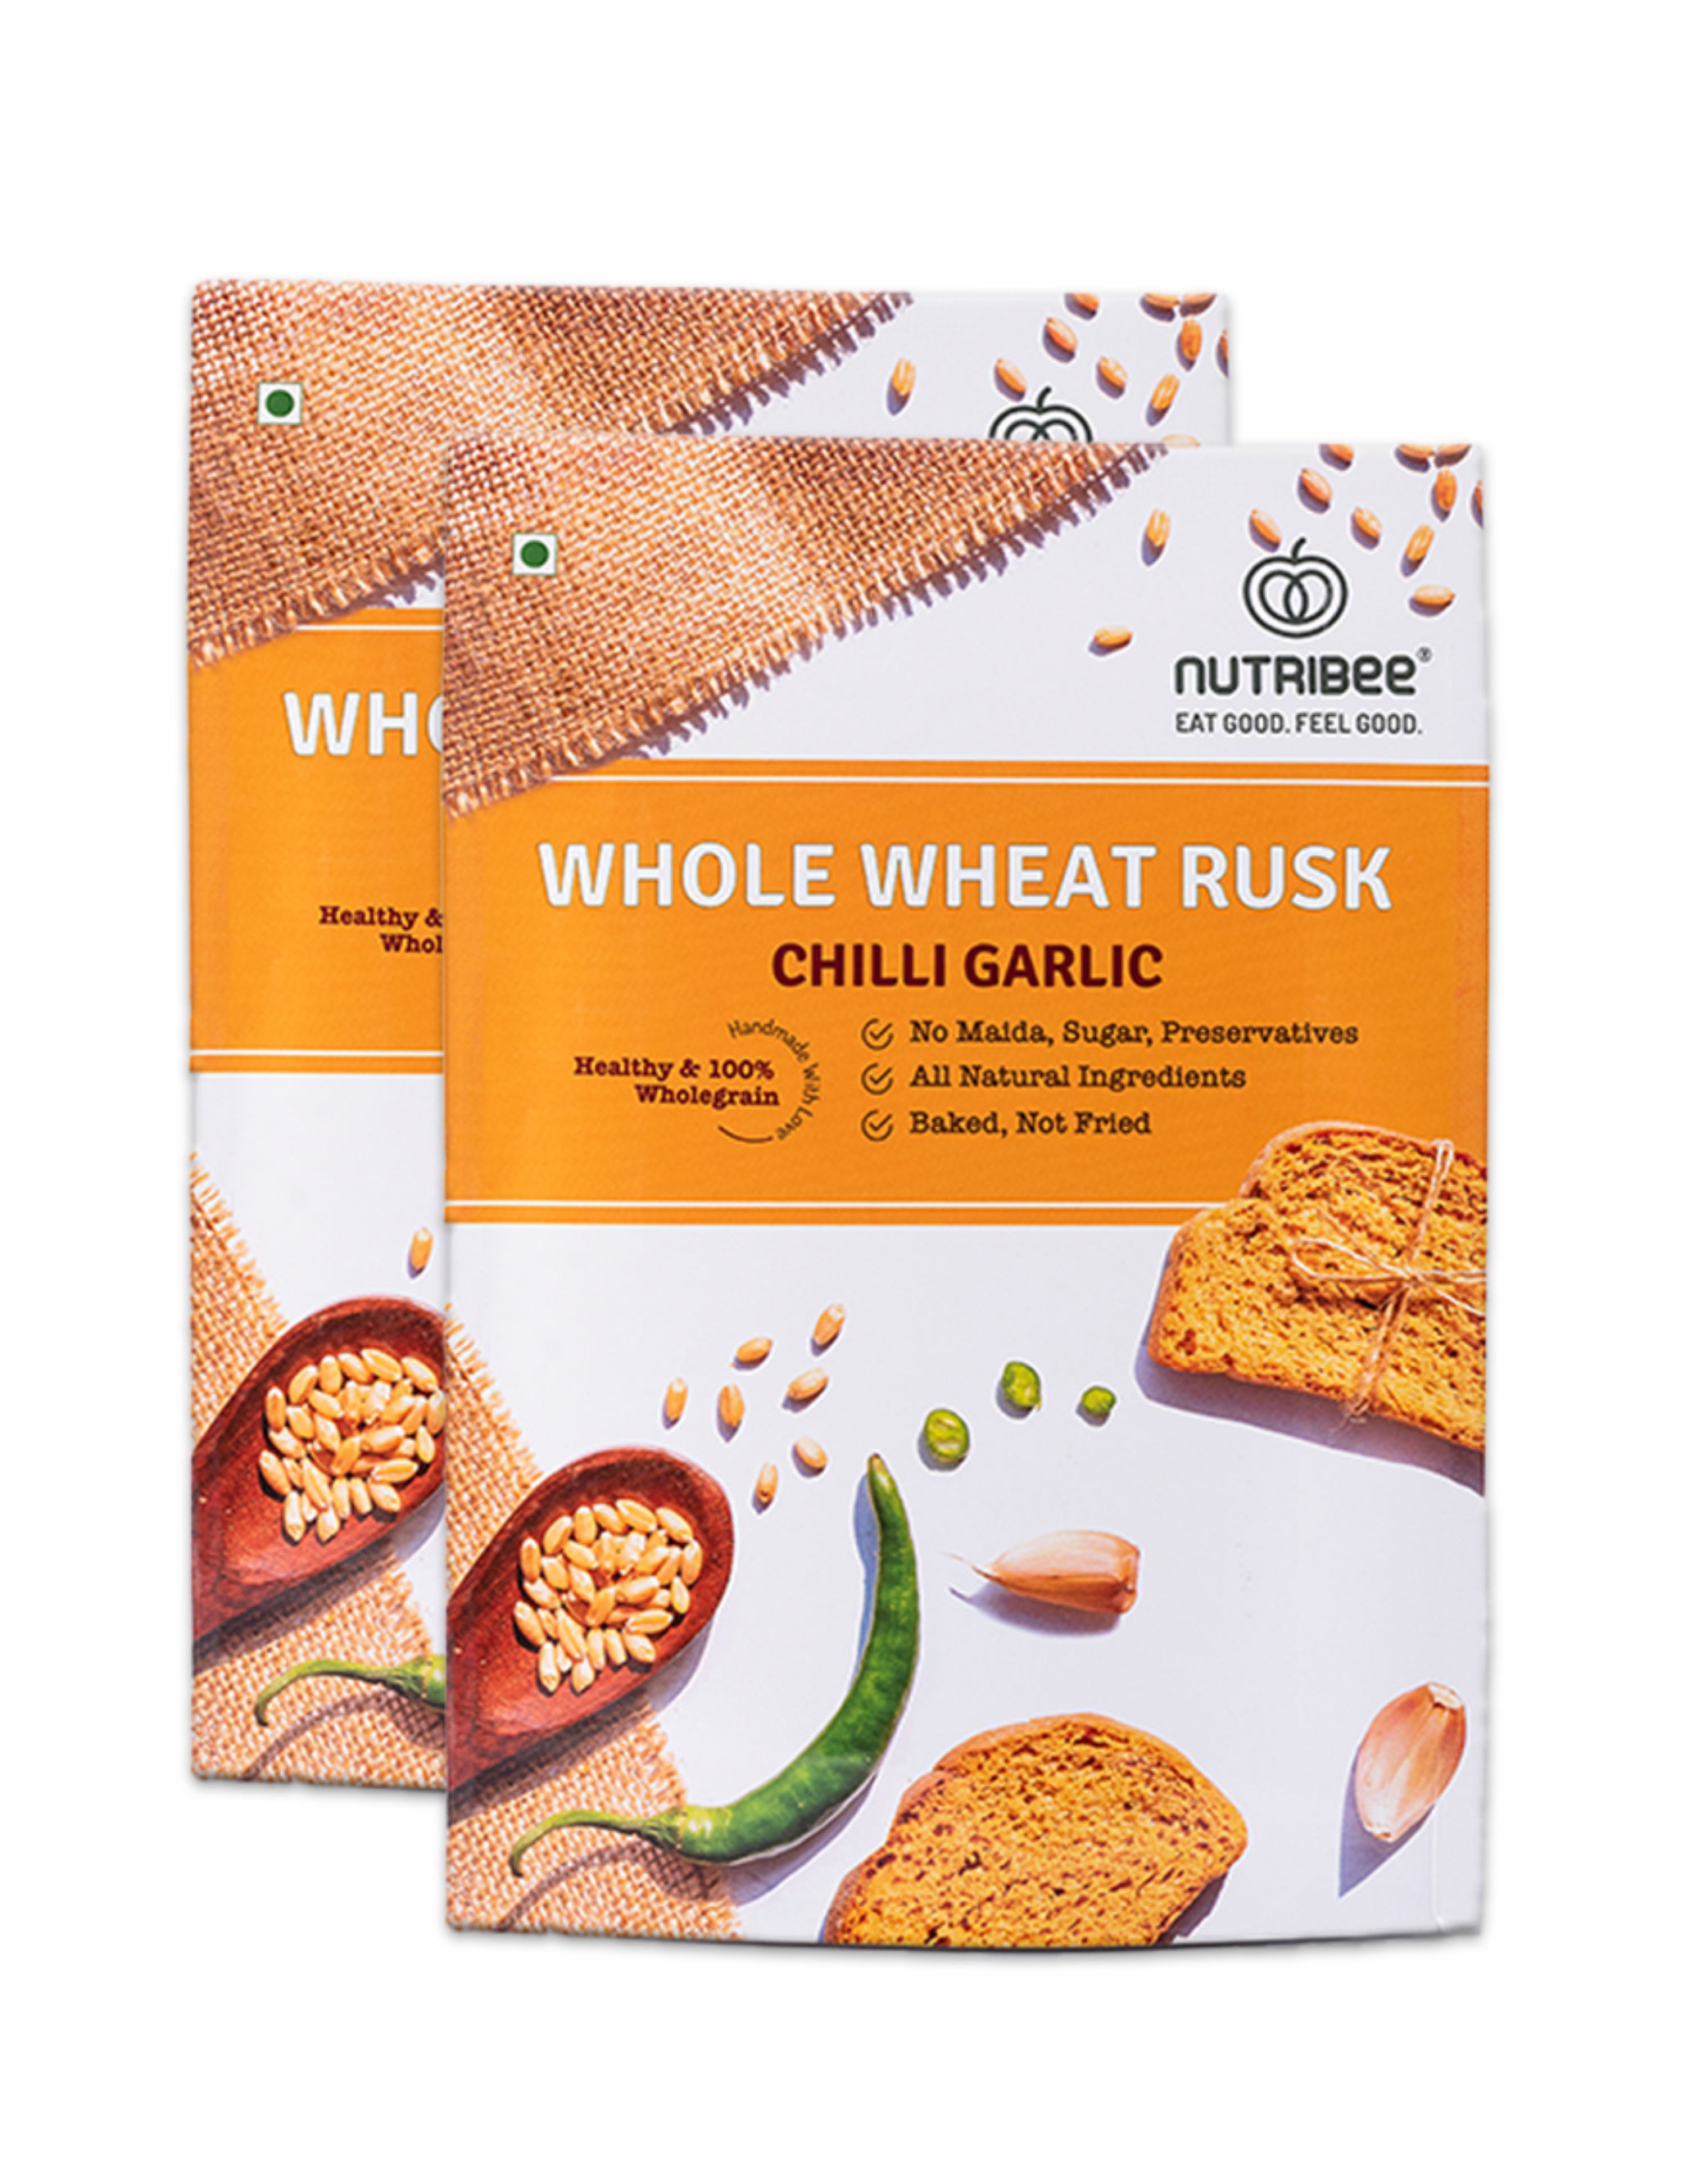 100% Whole Wheat Atta Rusk - Chilli Garlic | Refined Sugar-Free | Healthy Diet Toast | No Maida and Sugar | No Preservatives